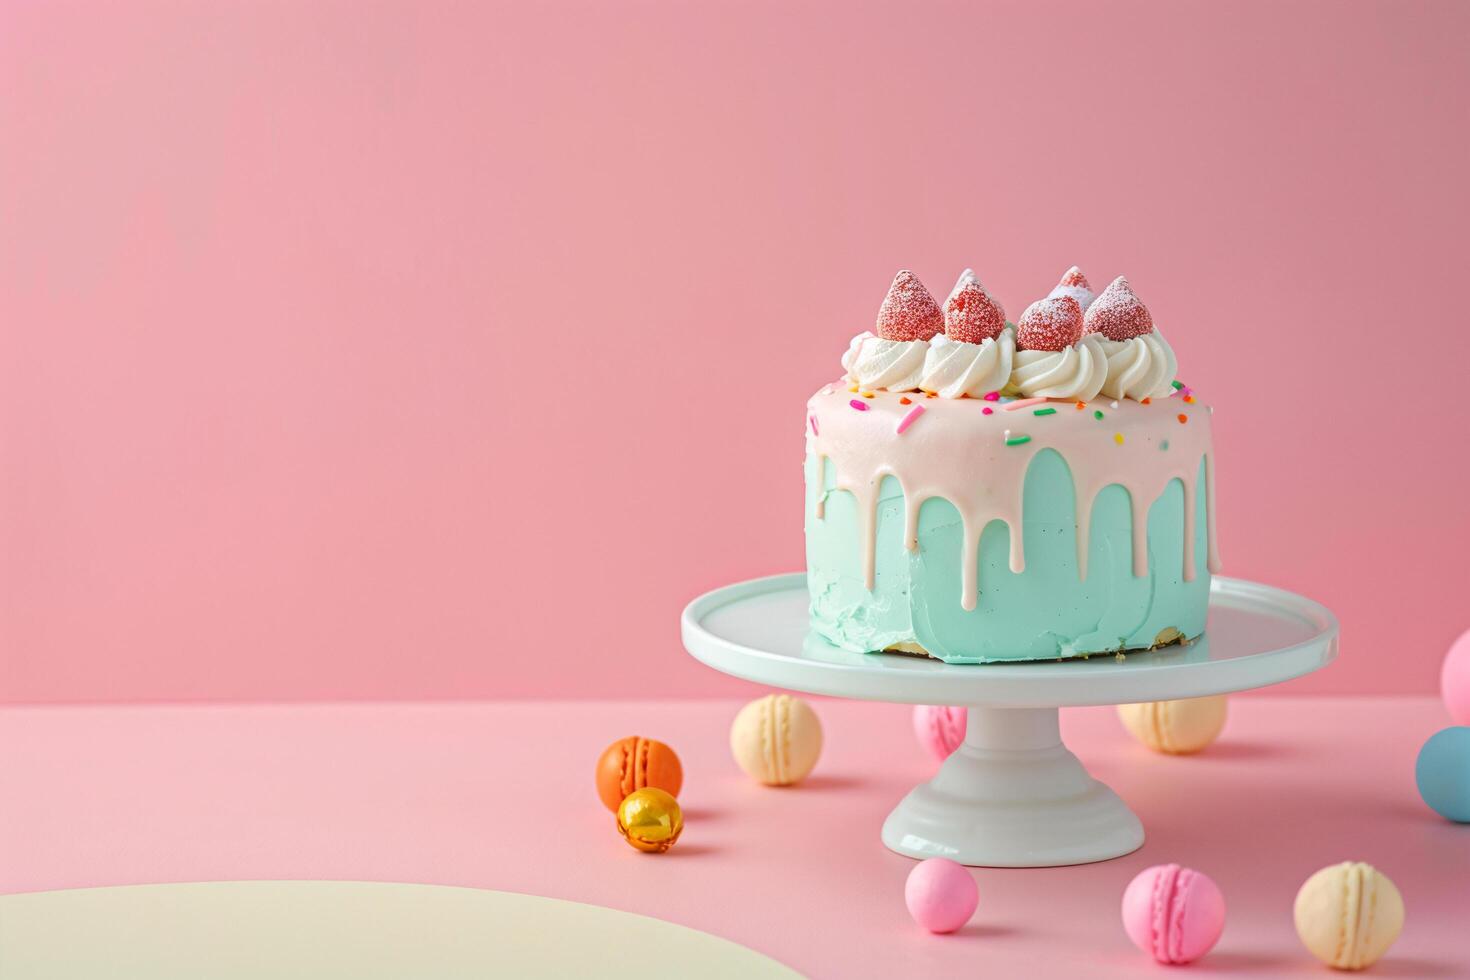 ai generato fantasia arcobaleno crema torta su pastello sfondo foto